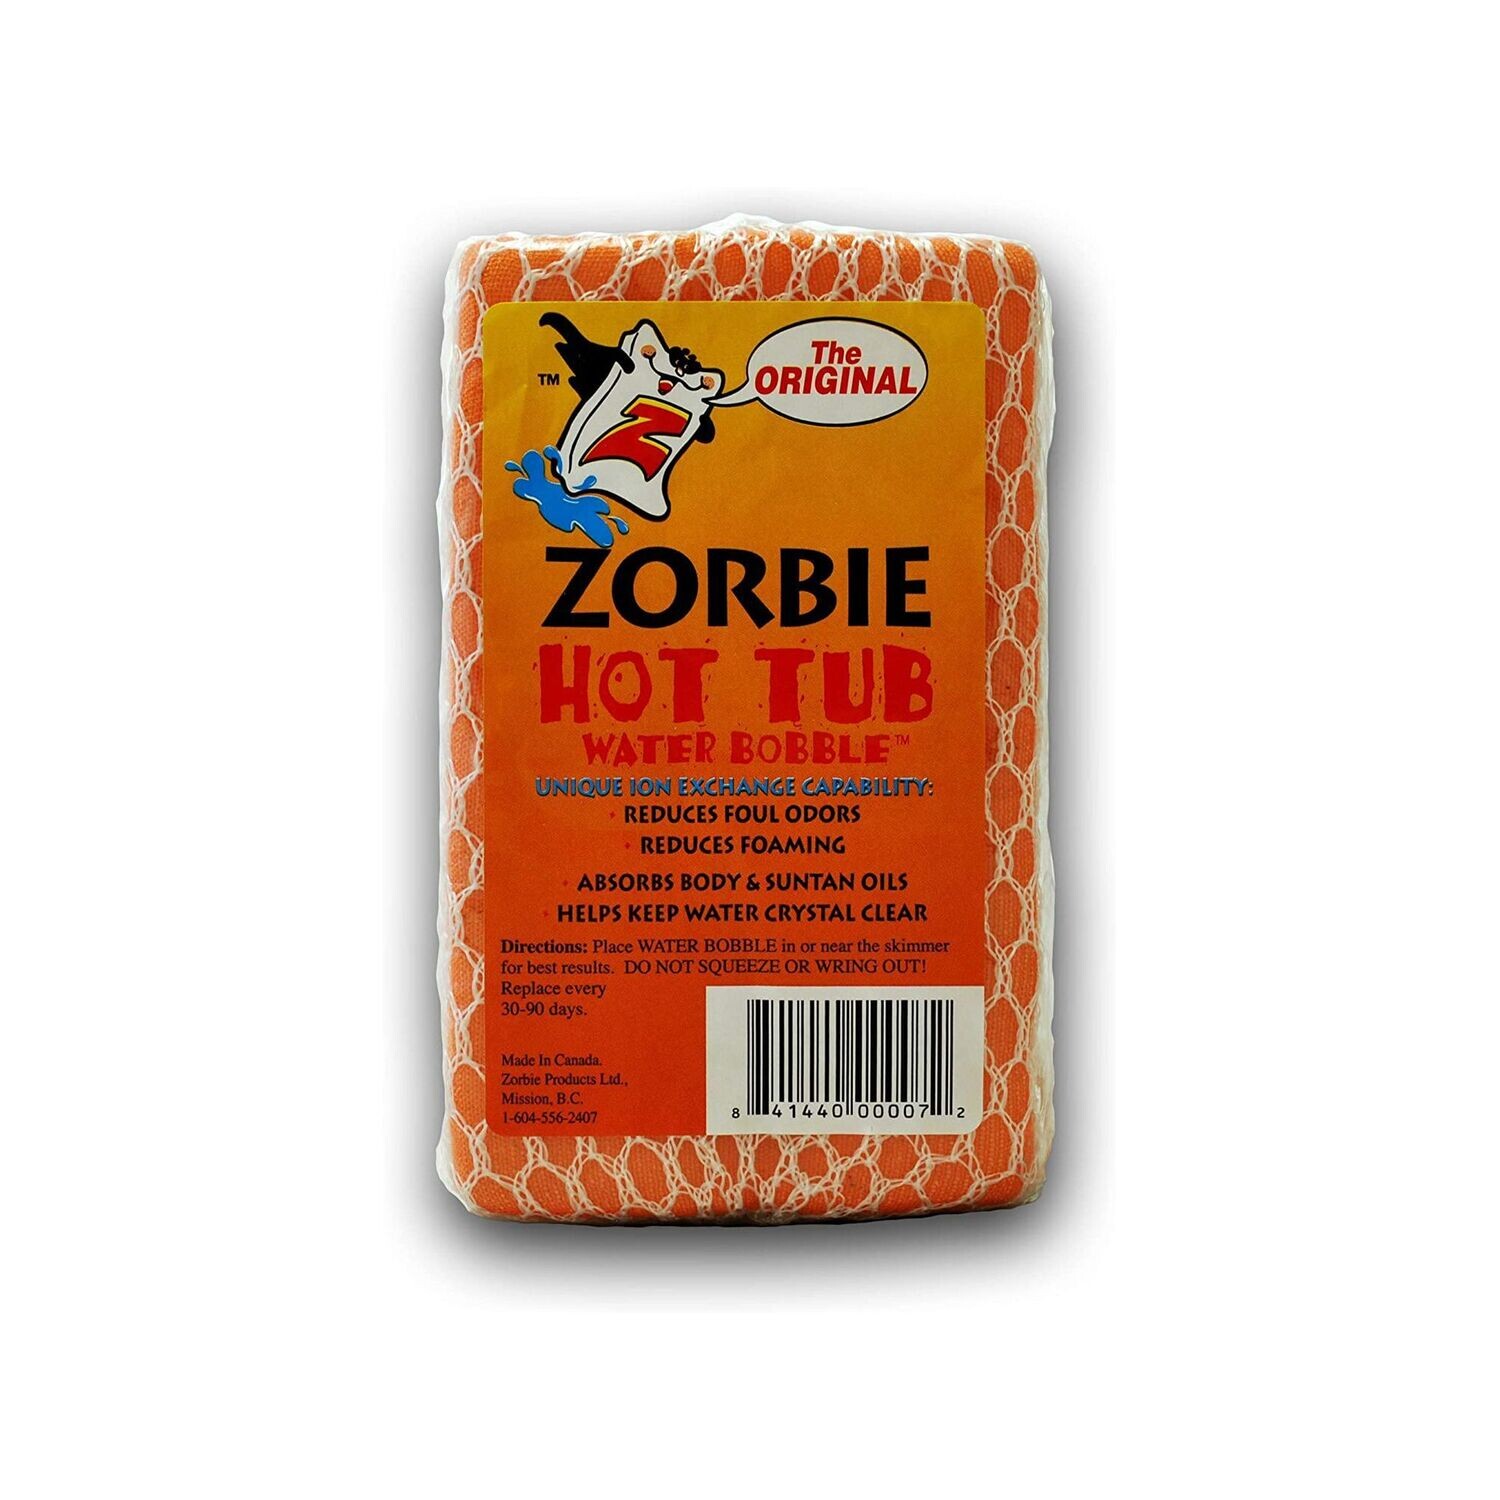 Zorbie Hot Tub Water Bobble